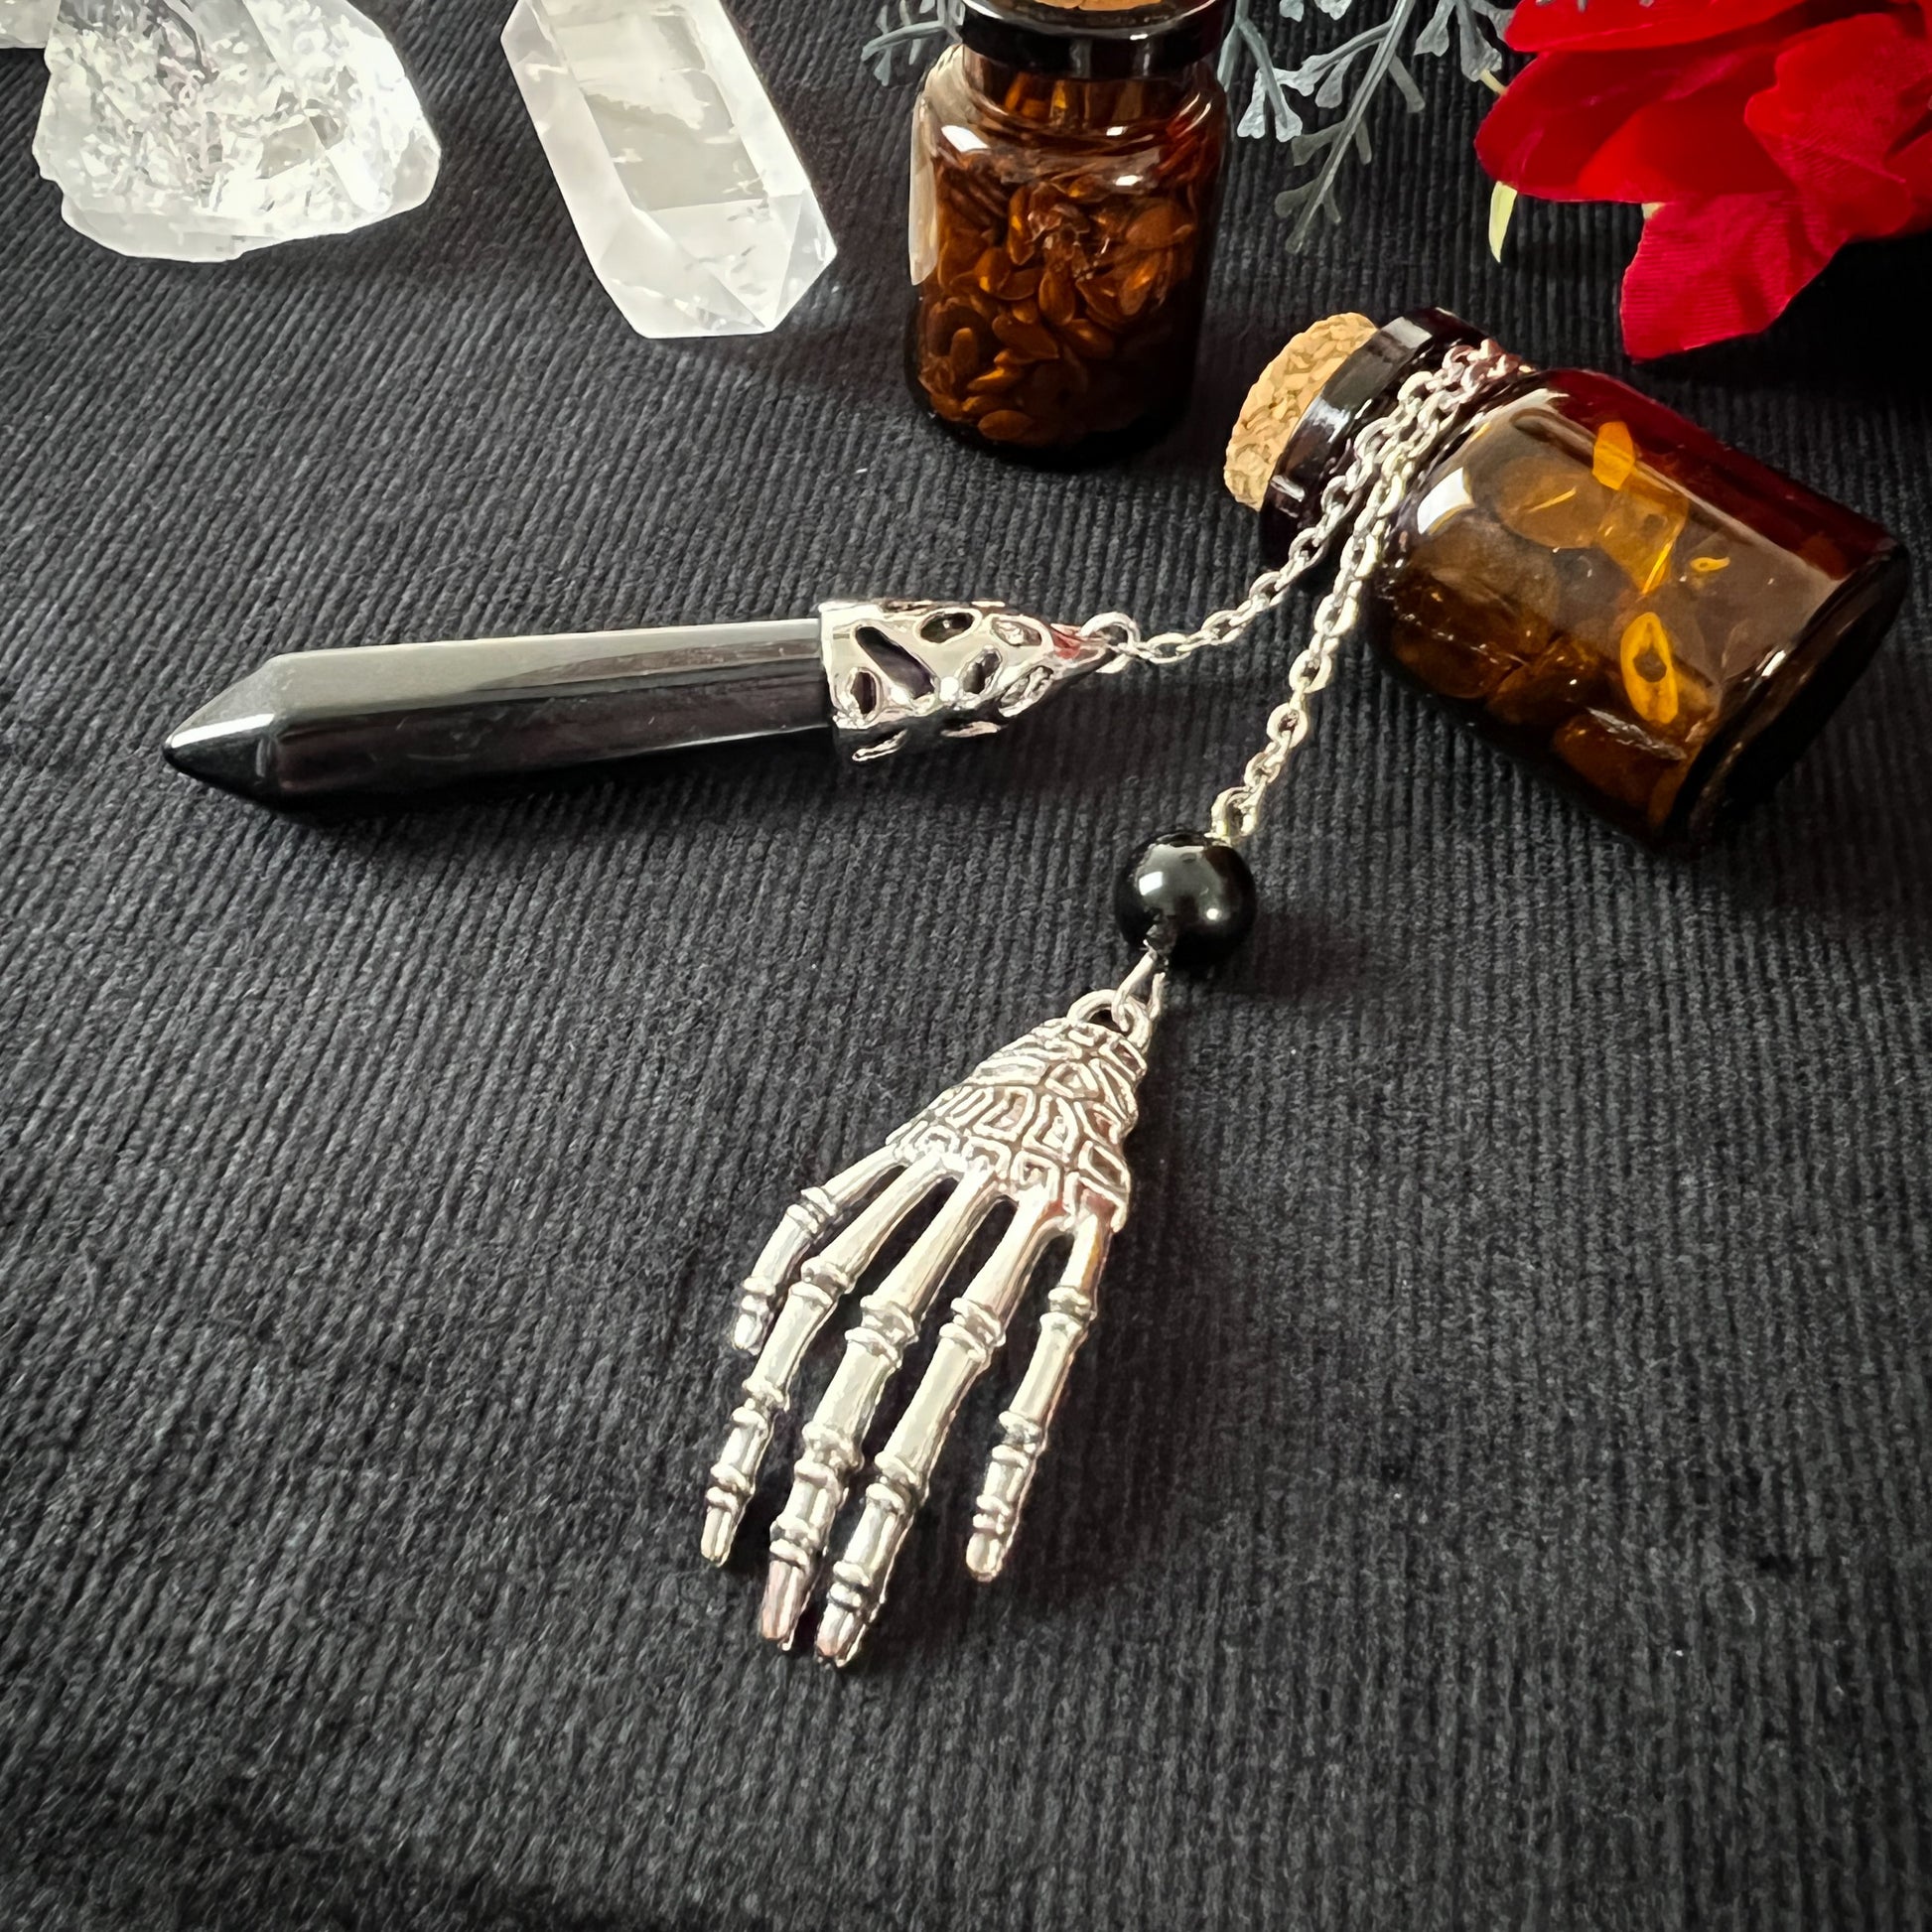 Onyx and skeleton hand dowsing pendulum